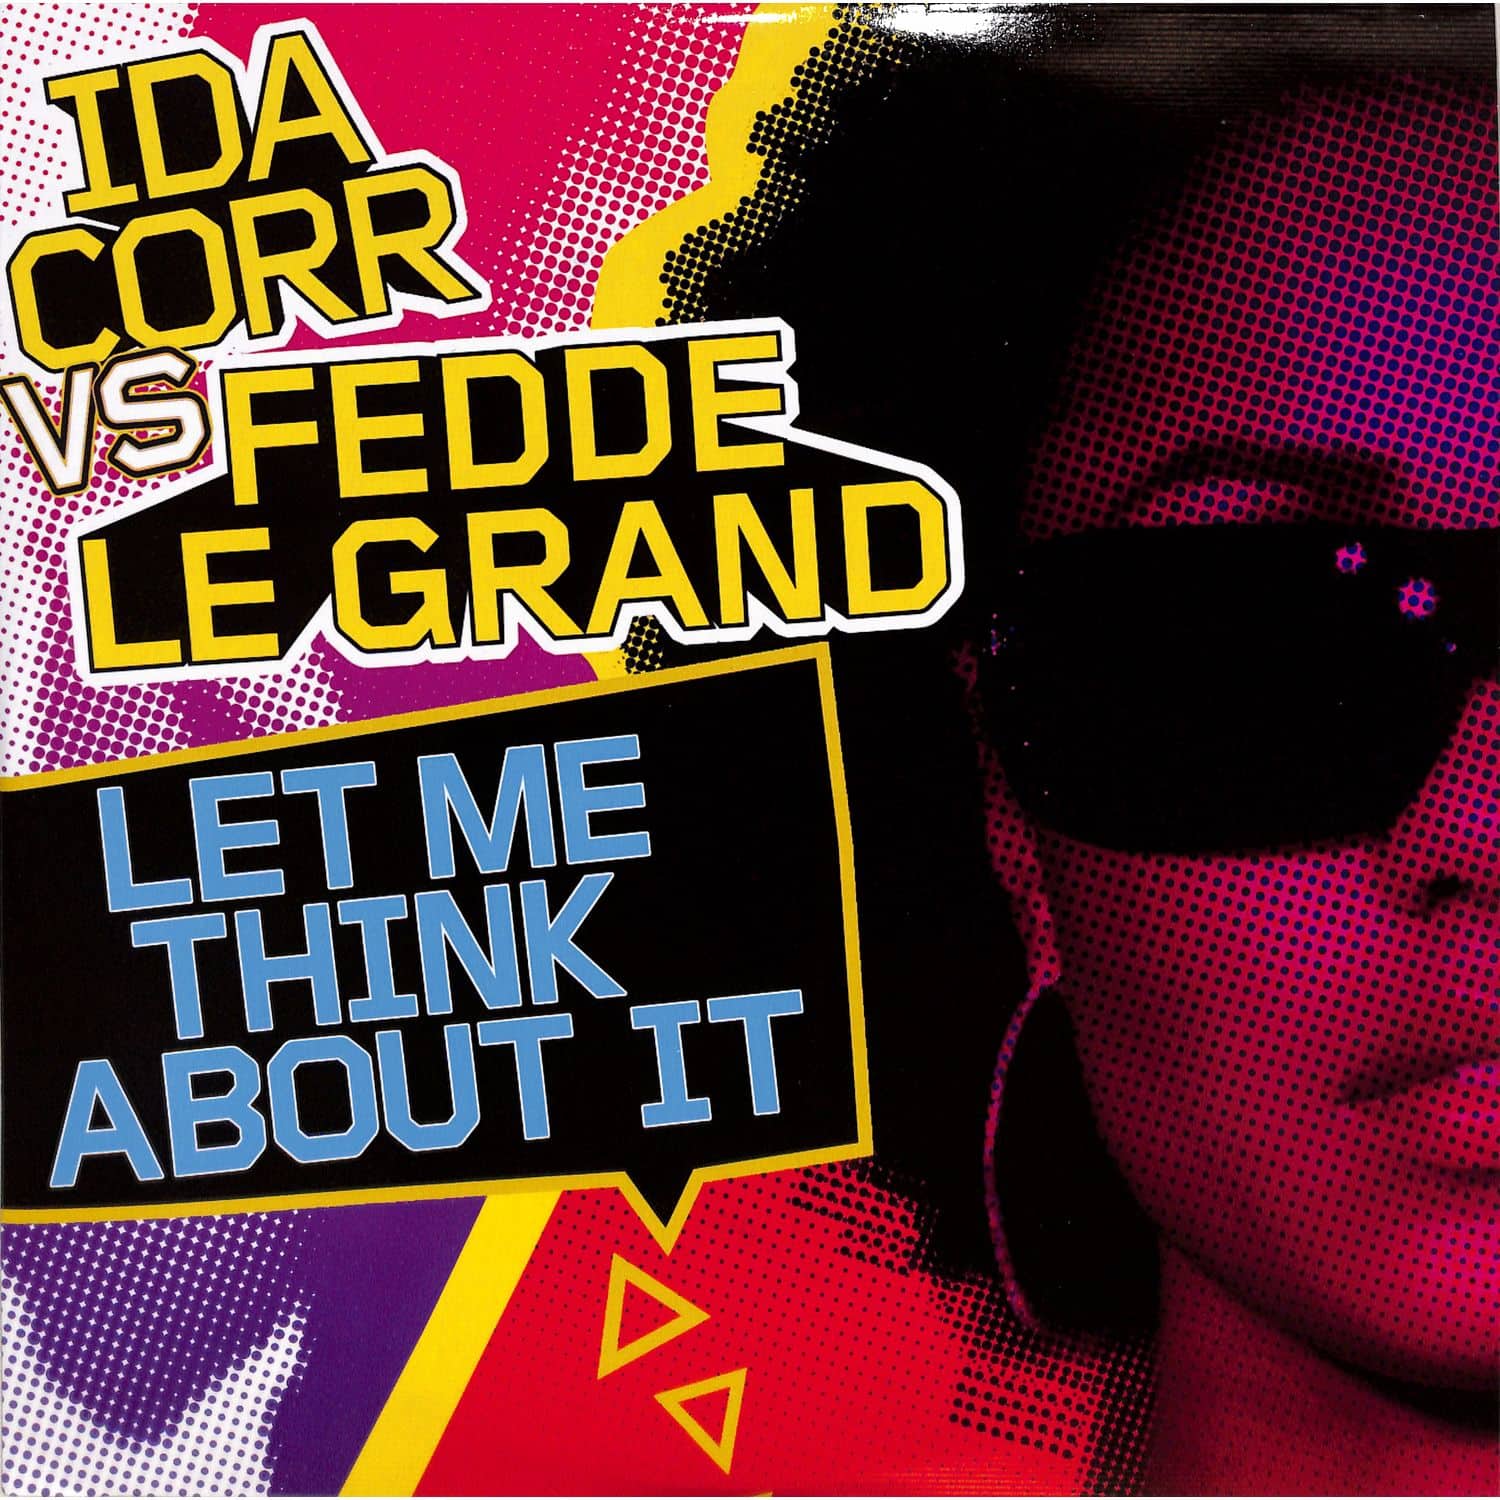 Ida Corr vs Fedde Le Grand - LET ME THINK ABOUT IT 